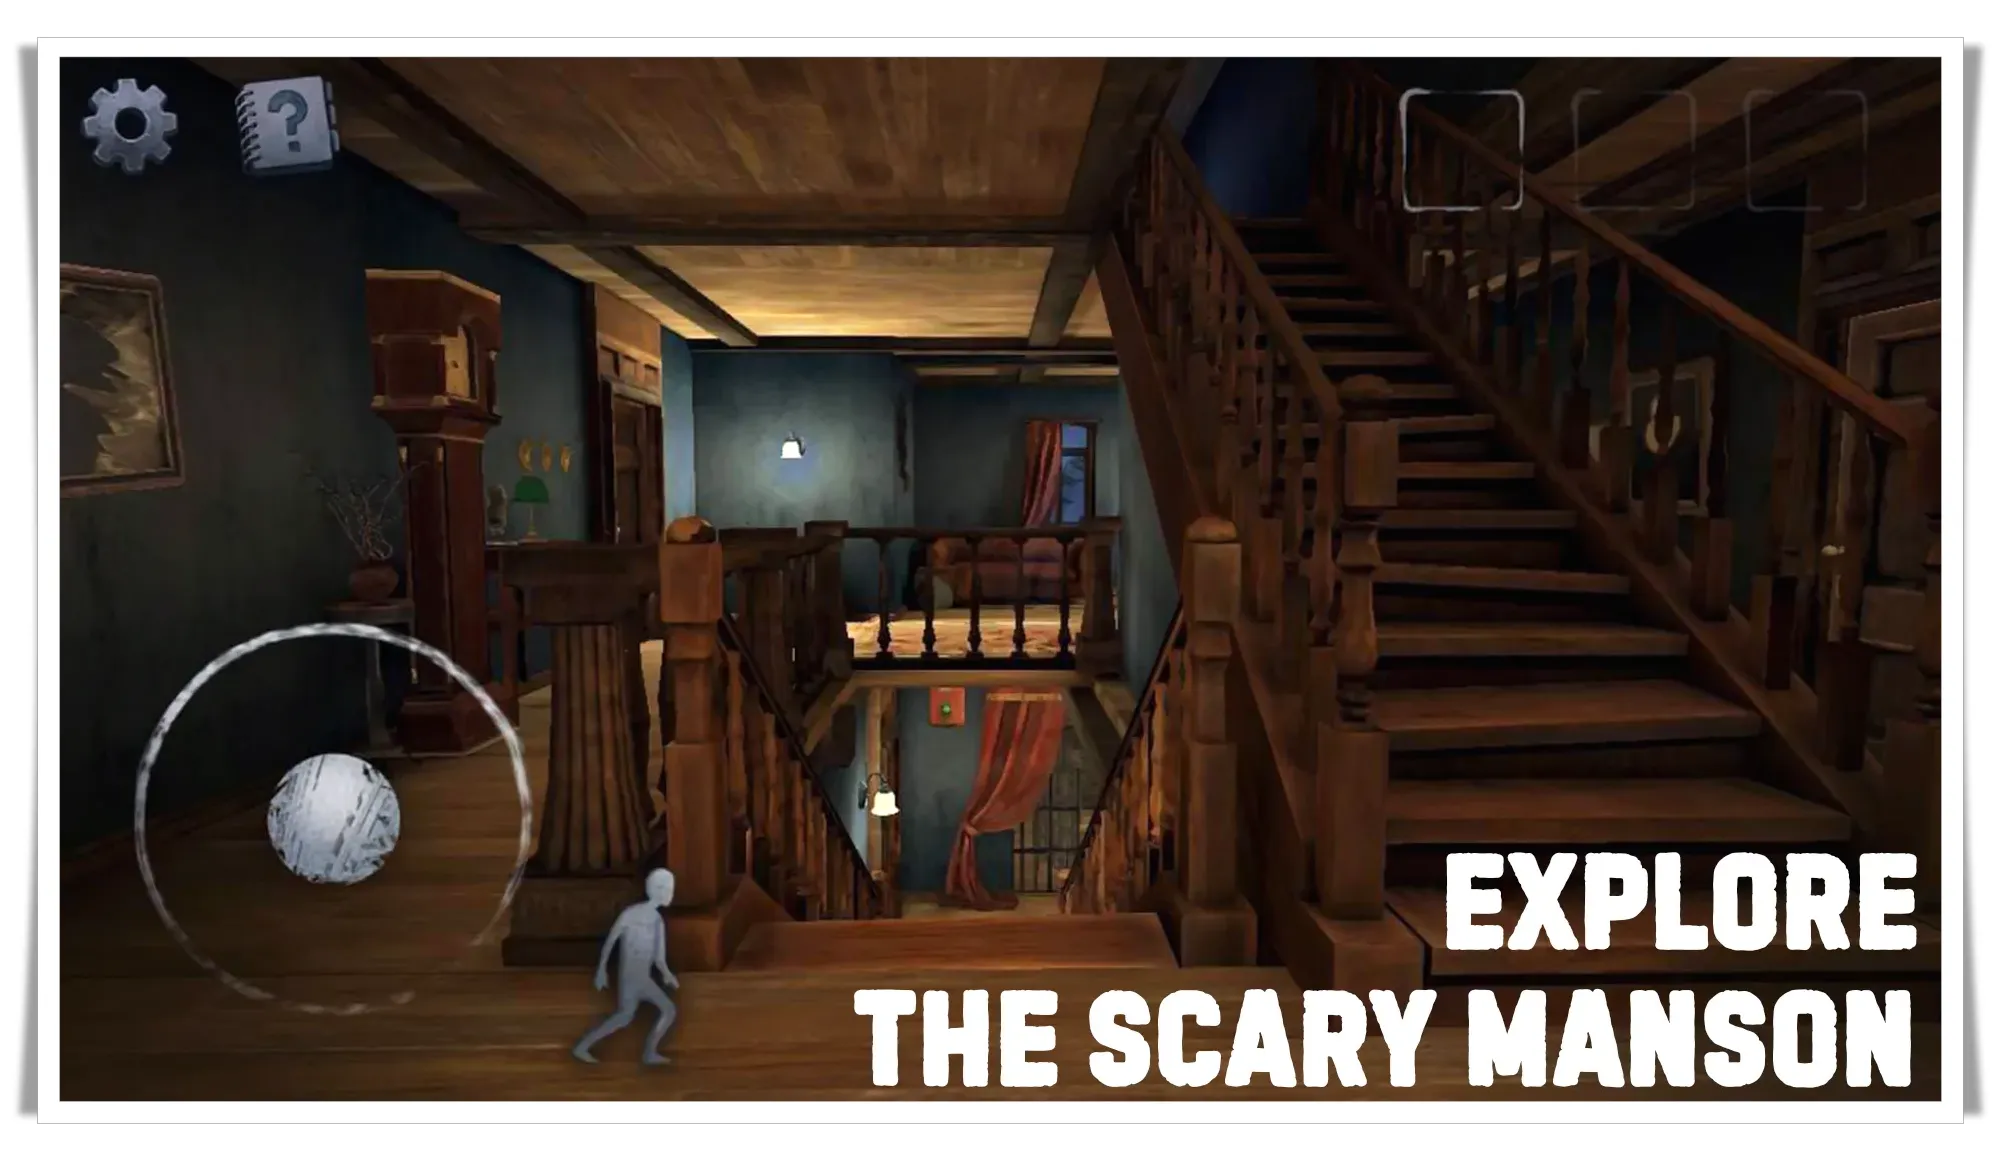 Eyes: Scary Thriller - Creepy Horror Game Mod Apk (All Unlocked)